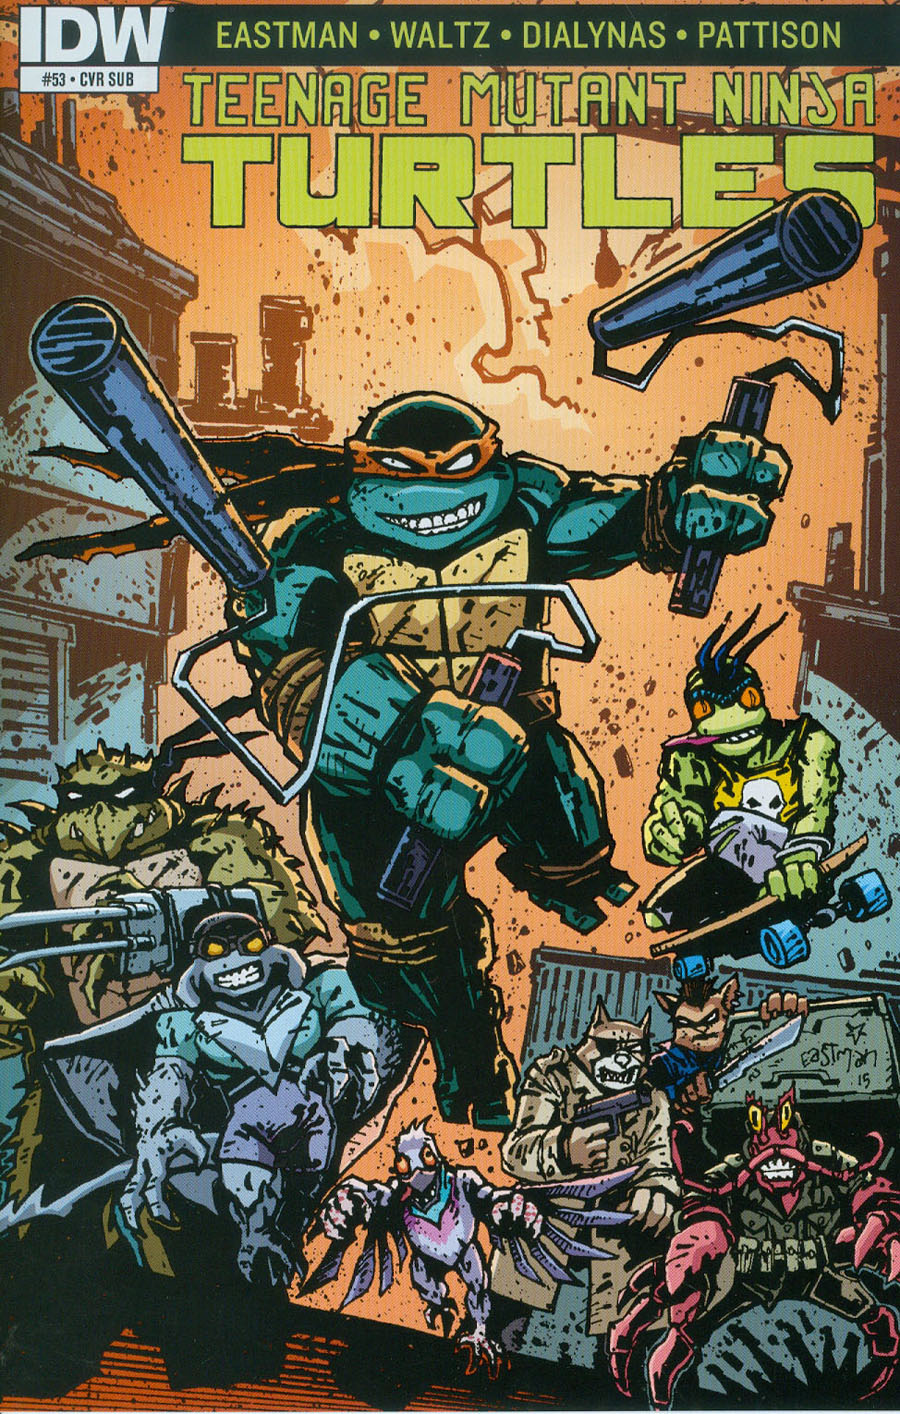 Teenage Mutant Ninja Turtles Vol 5 #53 Cover B Variant Kevin Eastman Subscription Cover